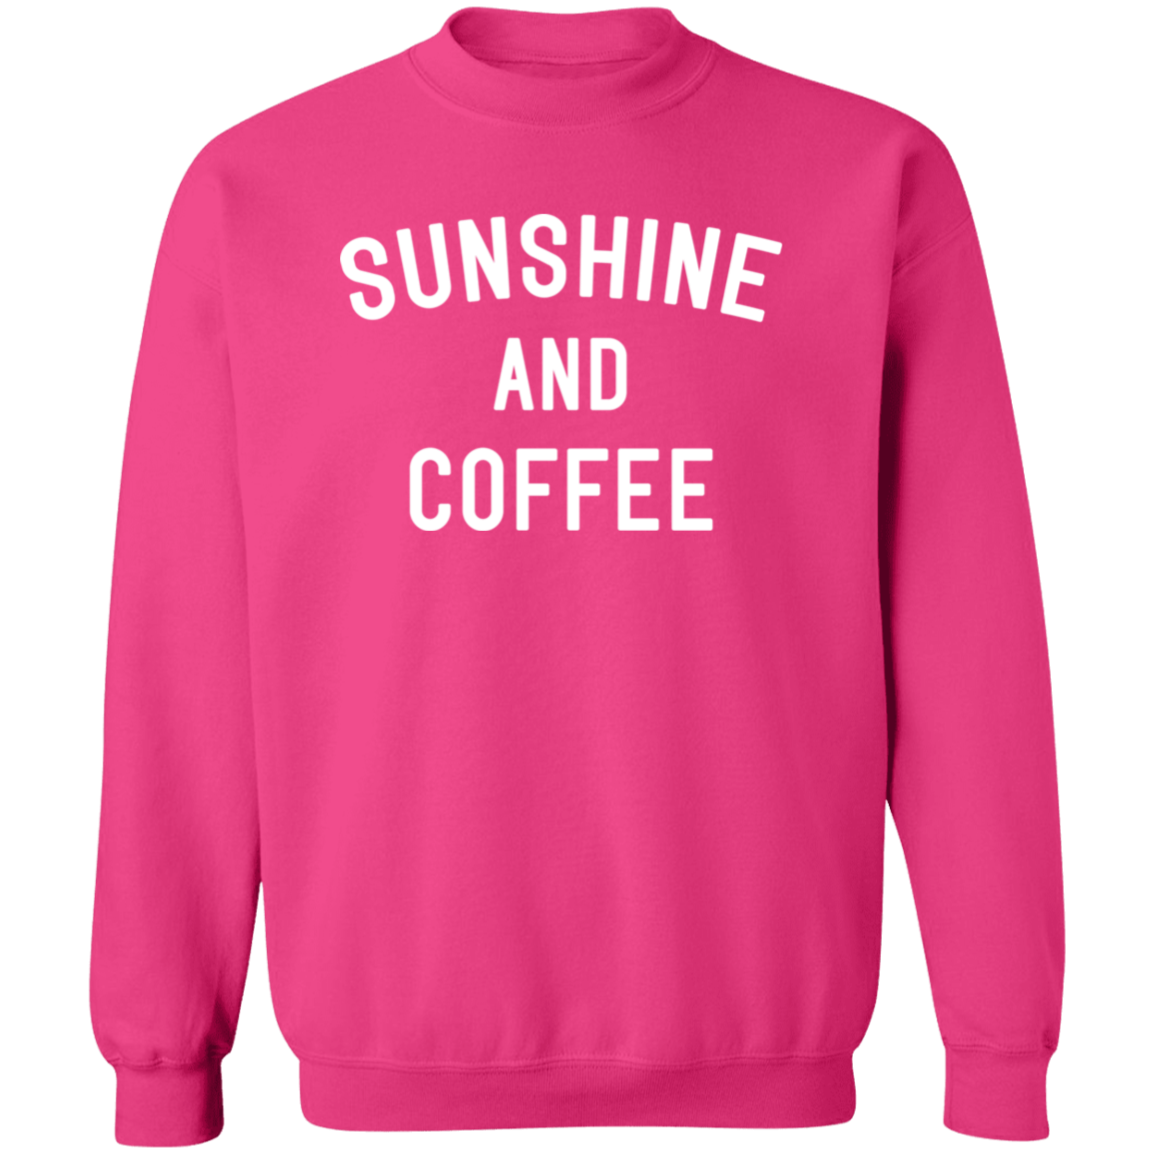 Sunshine and Coffee Sweatshirt